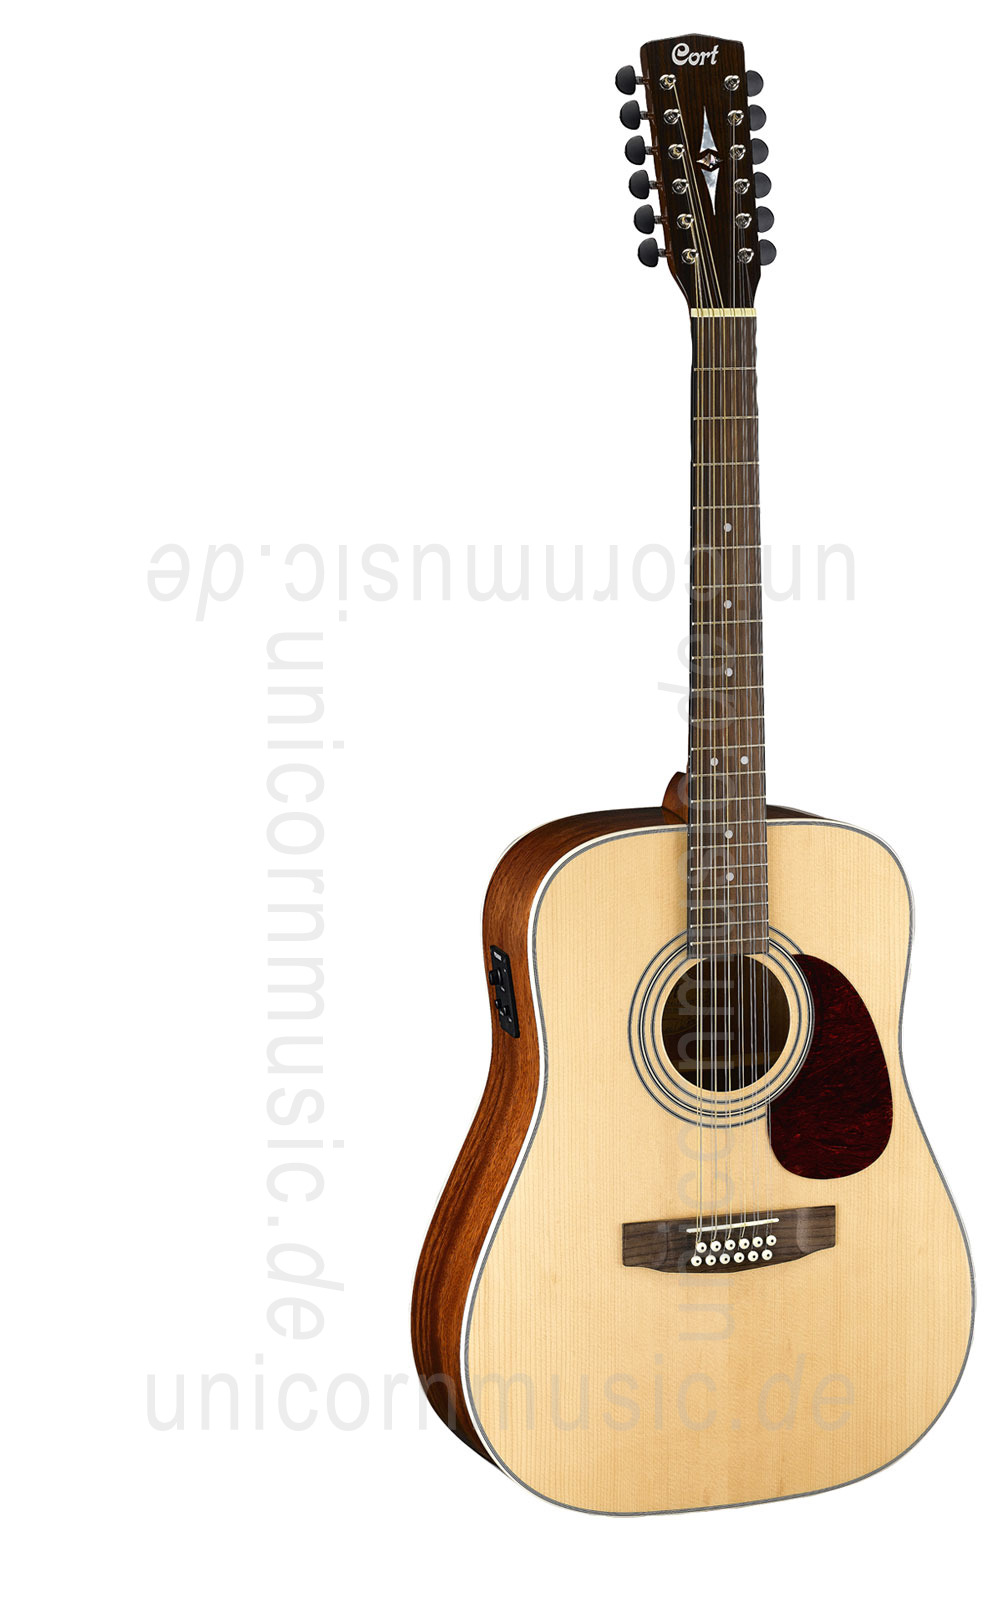 to article description / price Acoustic Guitar CORT EARTH 70-12E OP - Fishman Sonicore - Dreadnought - solid spruce top